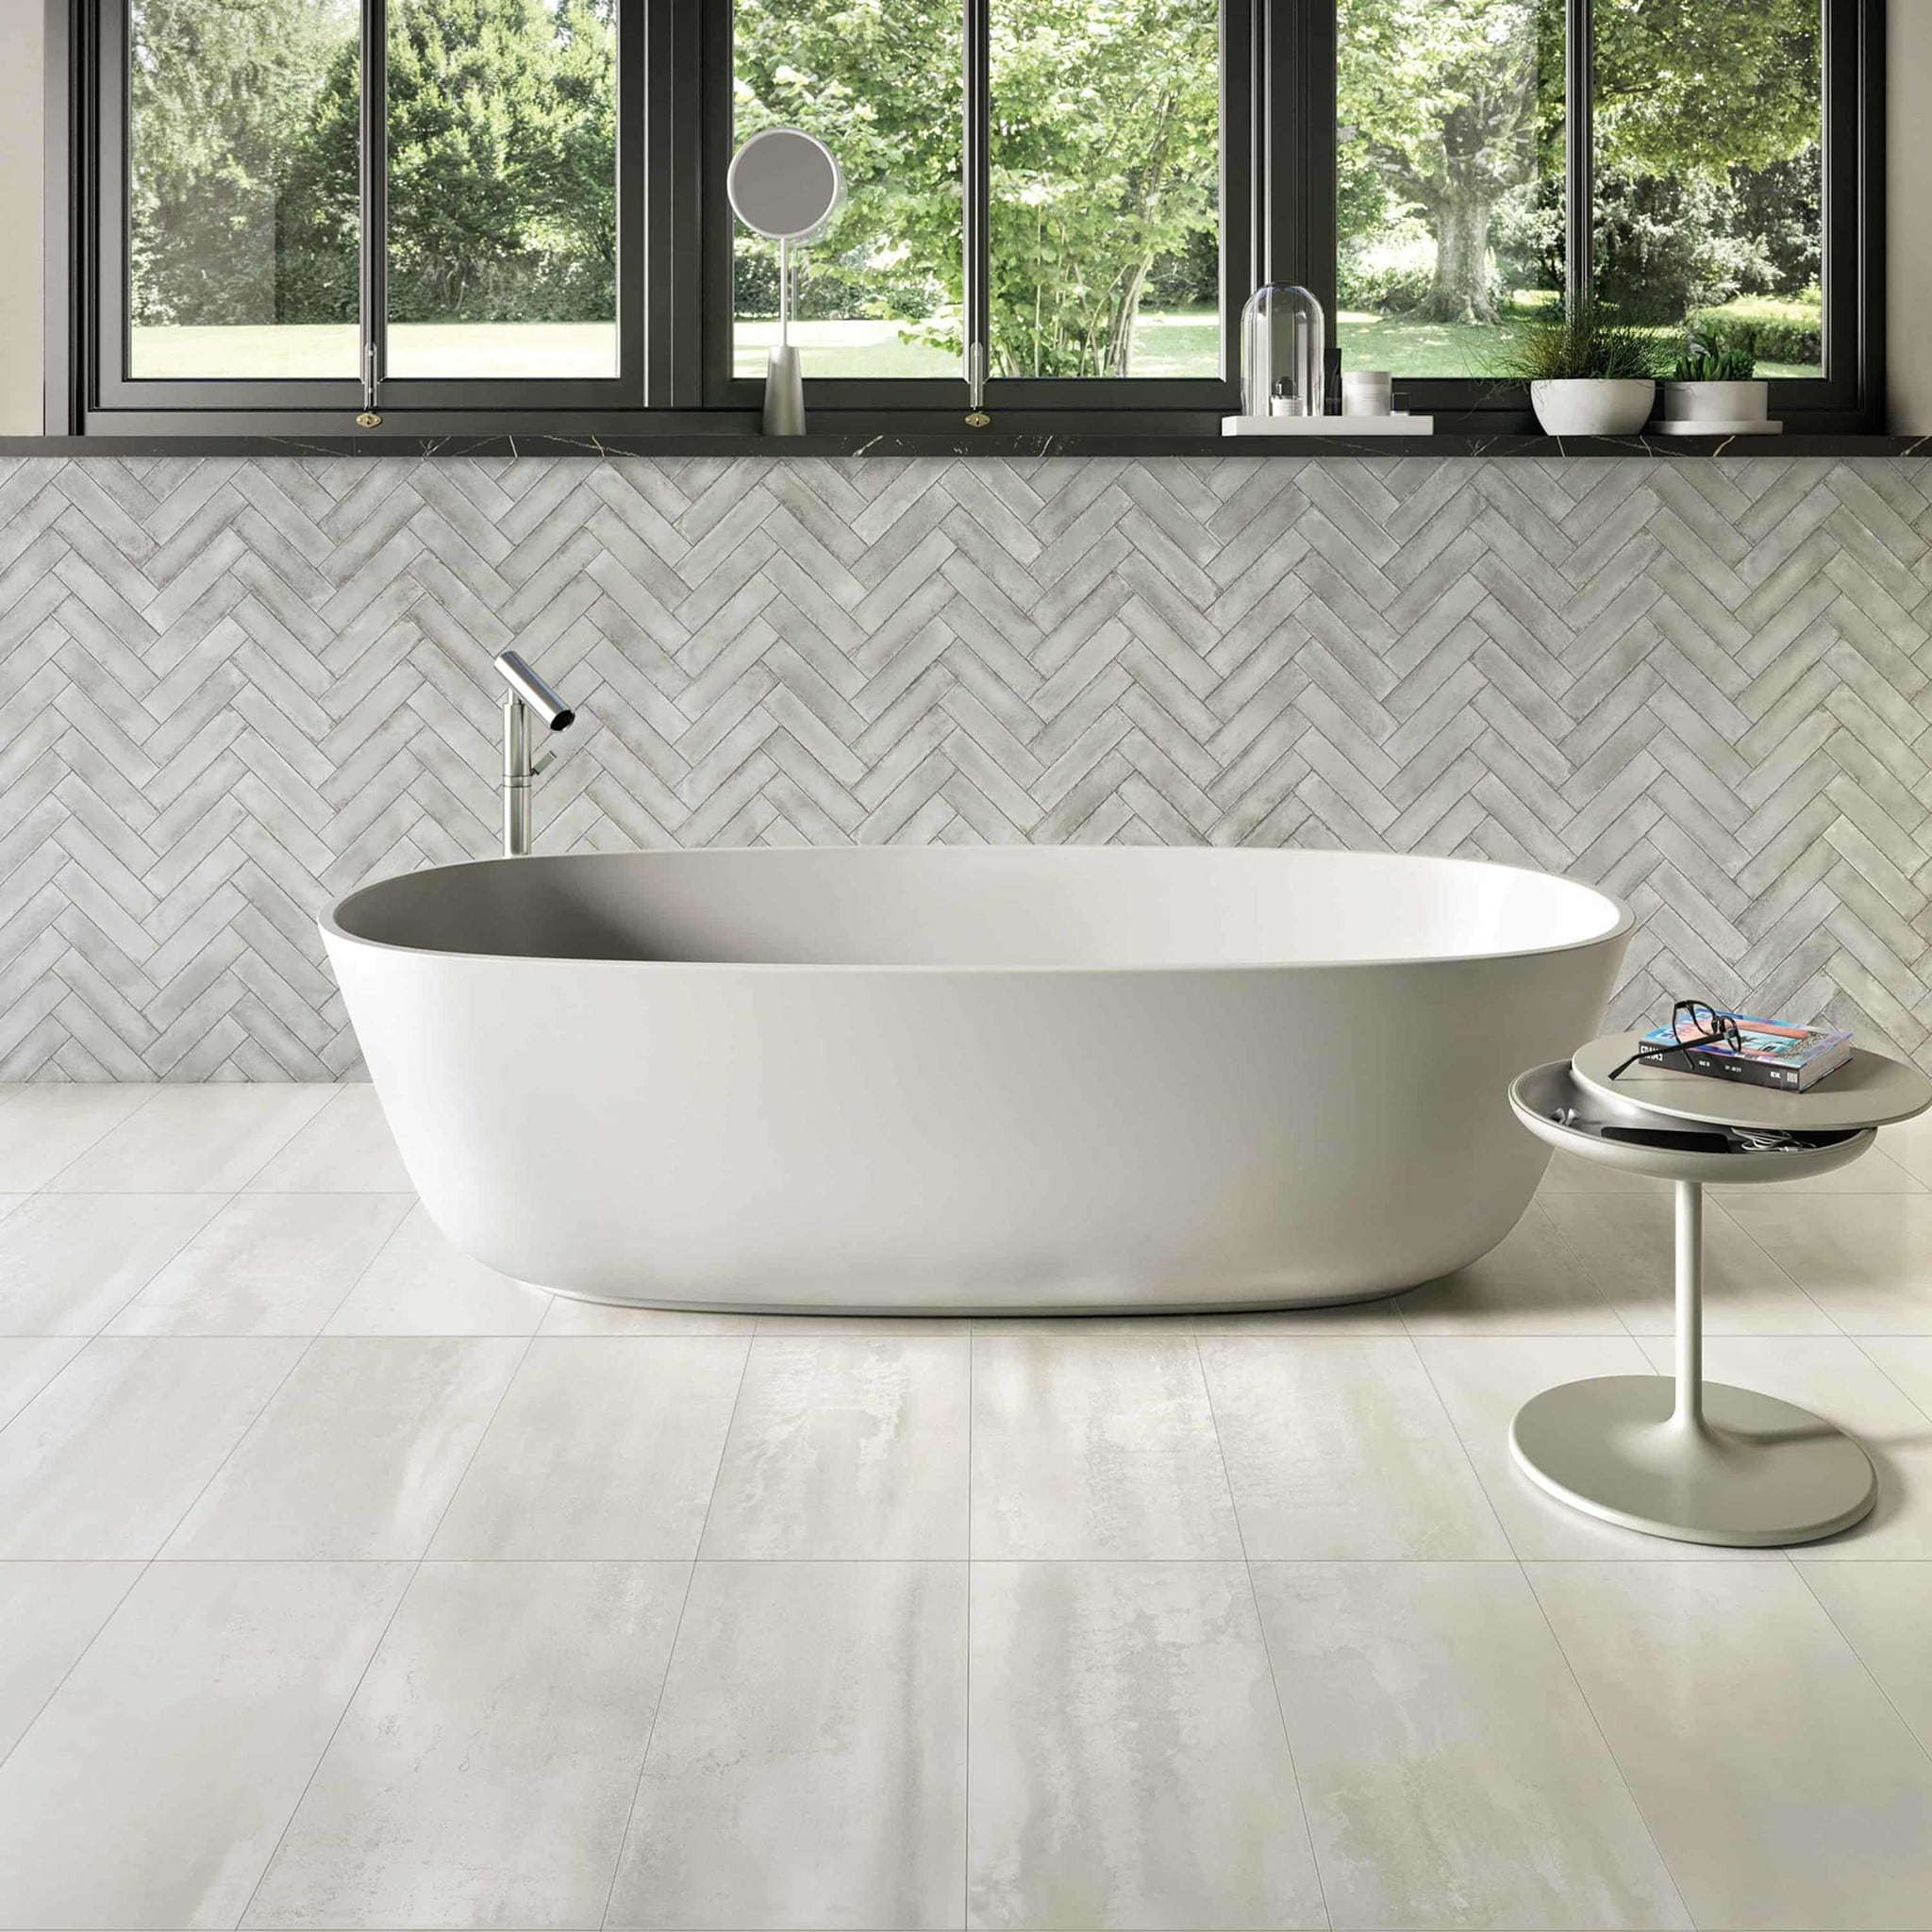 Modena White Metal Effect Porcelain Tiles Bathroom IvySpace